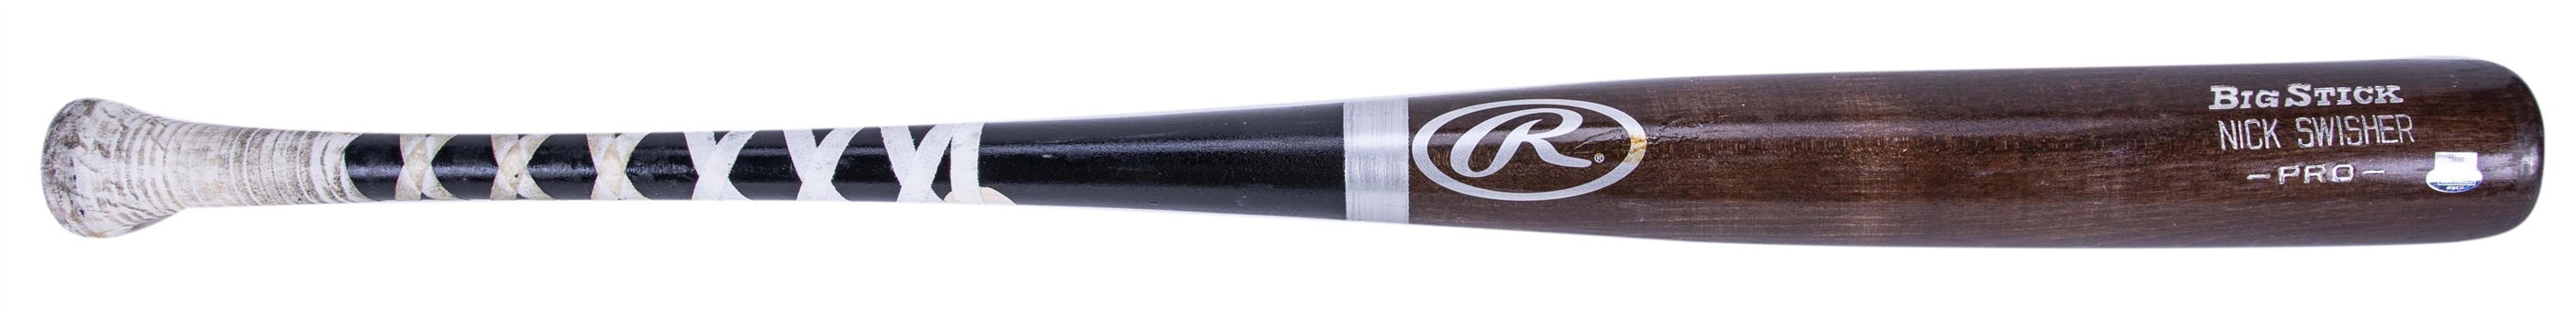 2012 Nick Swisher Game Used Rawlings M1070B Model Bat (PSA/DNA & Steiner)